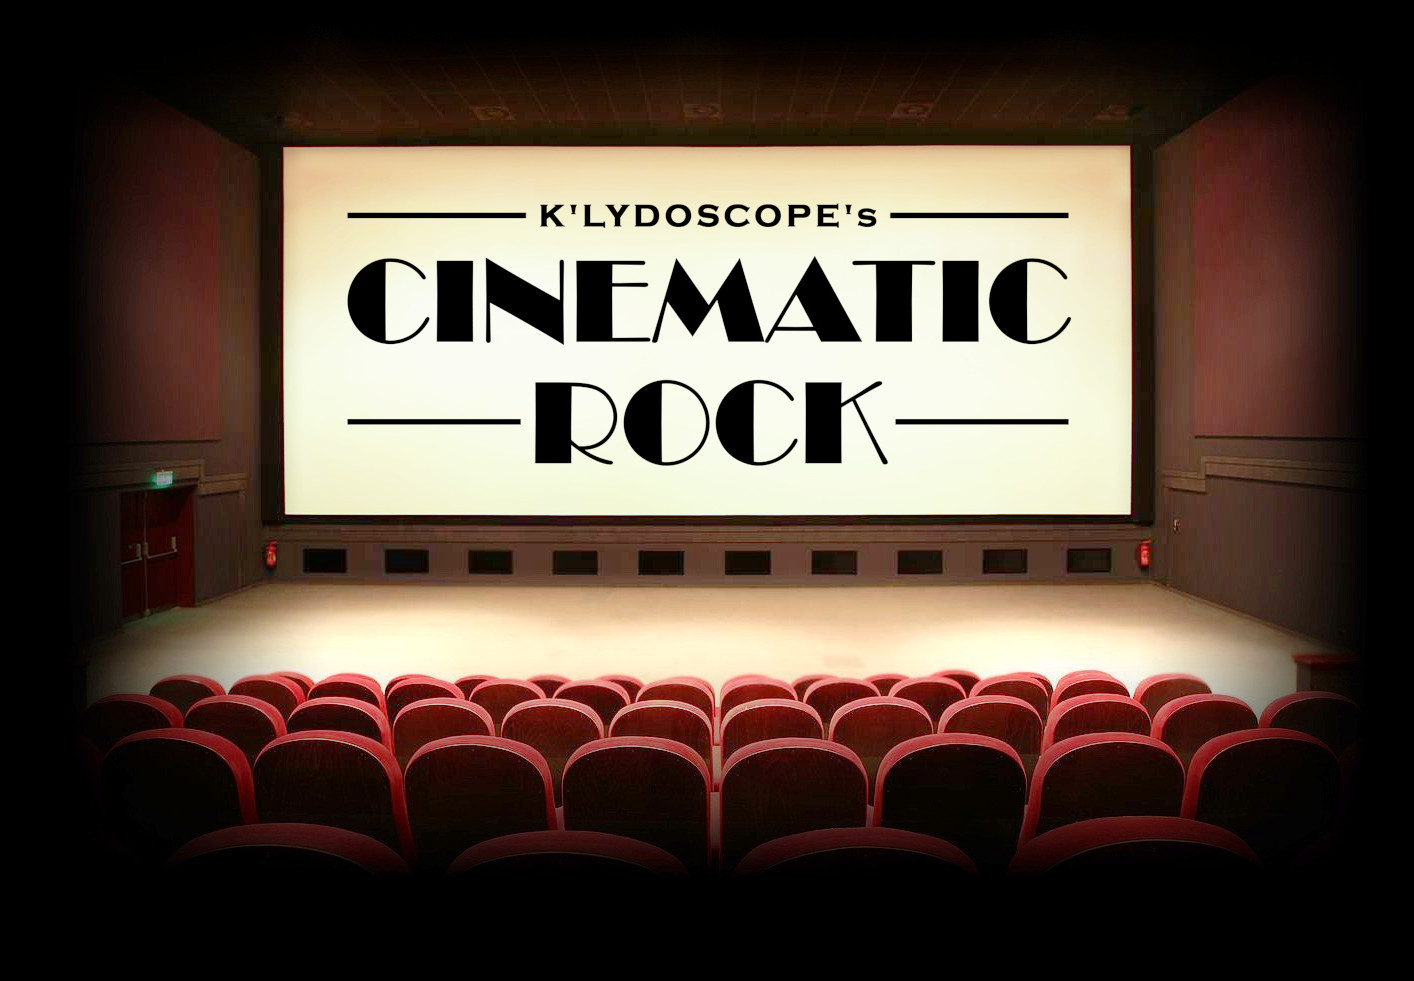 K'lydoscope's Cinematic Rock